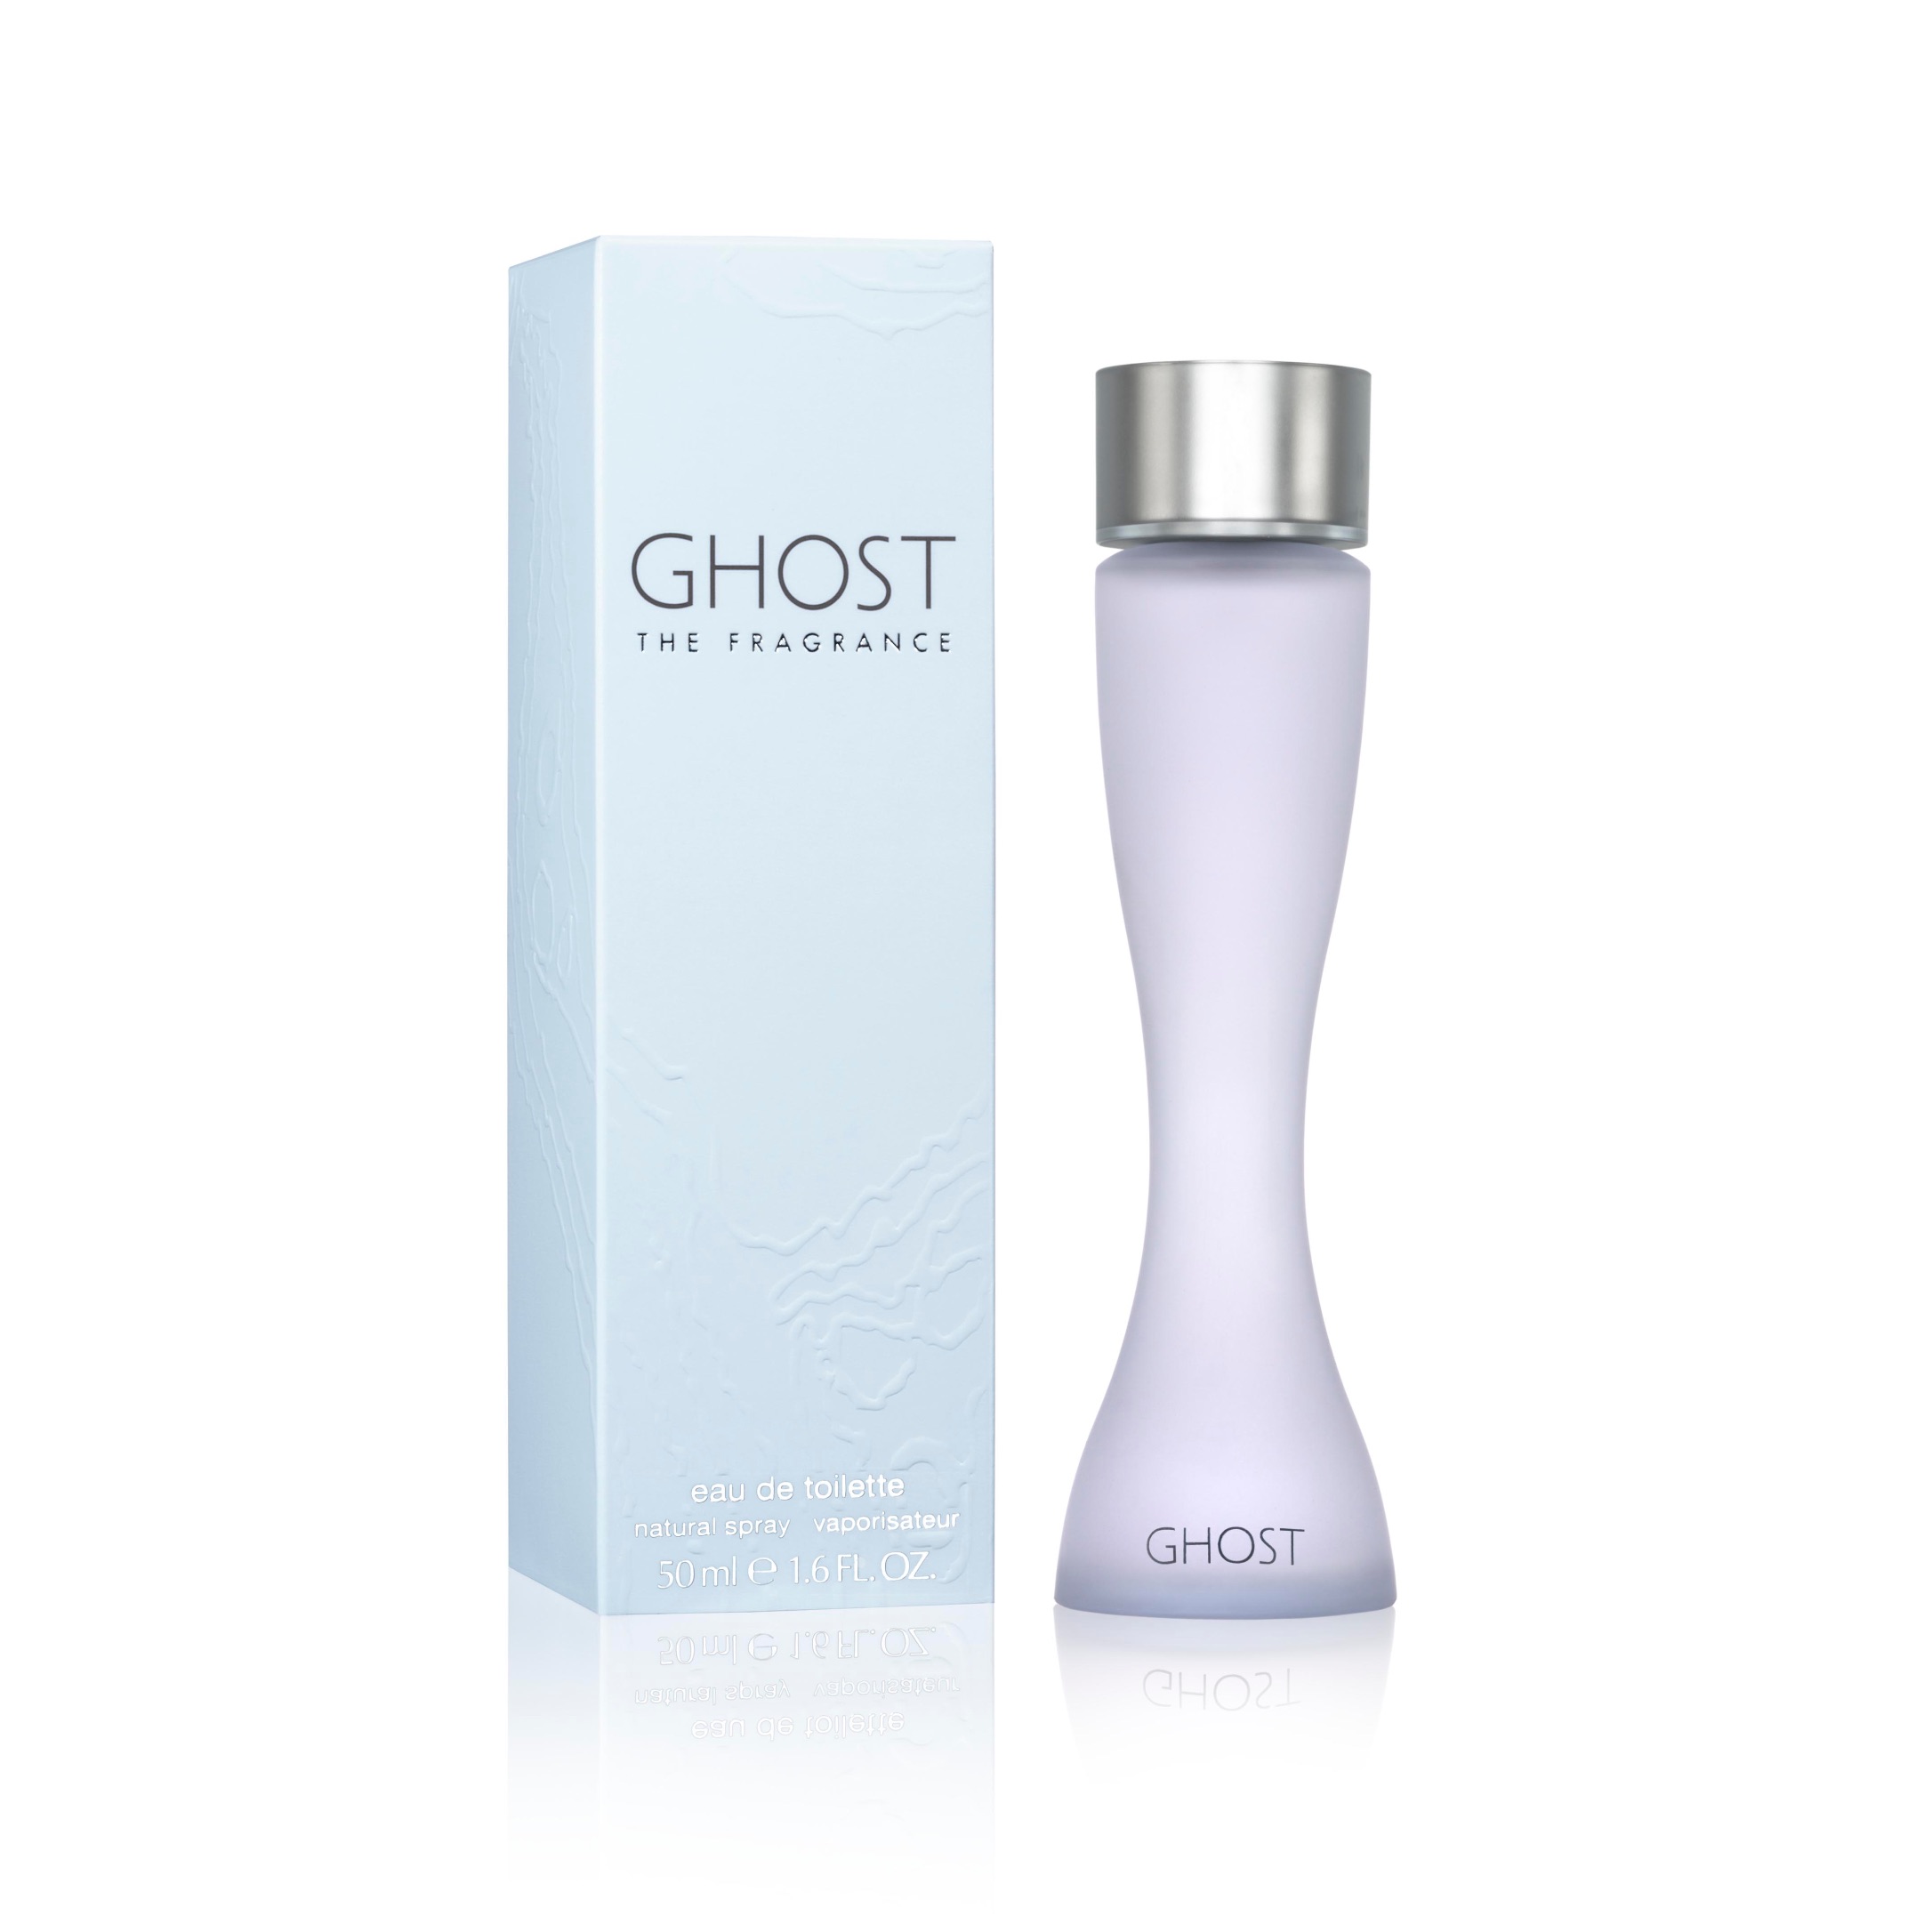 ghost perfume price